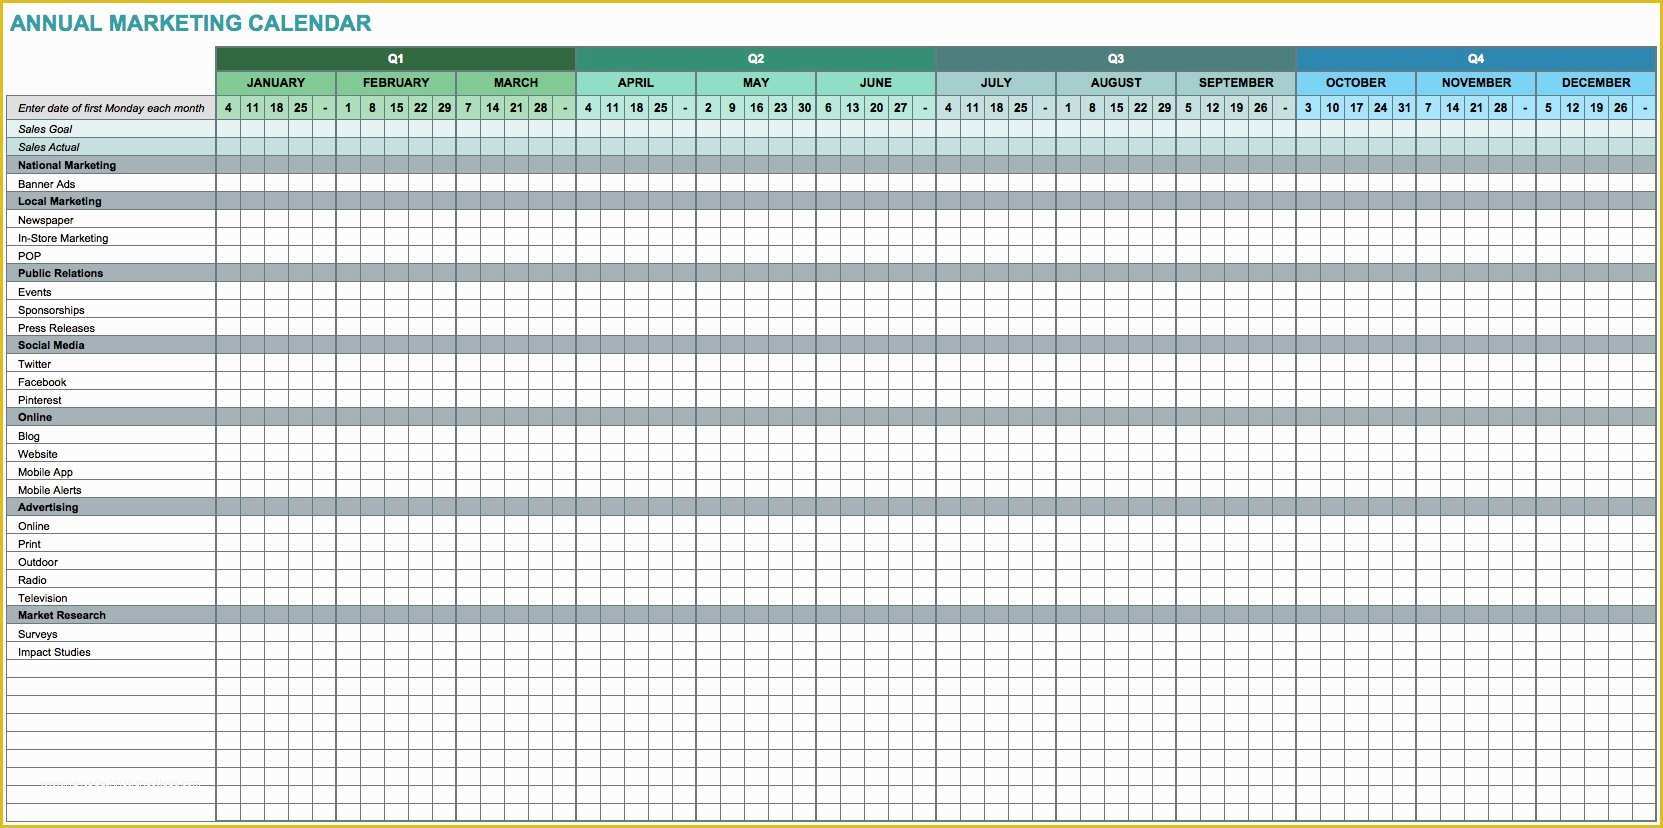 Content Calendar Template Free Of 9 Free Marketing Calendar Templates for Excel Smartsheet